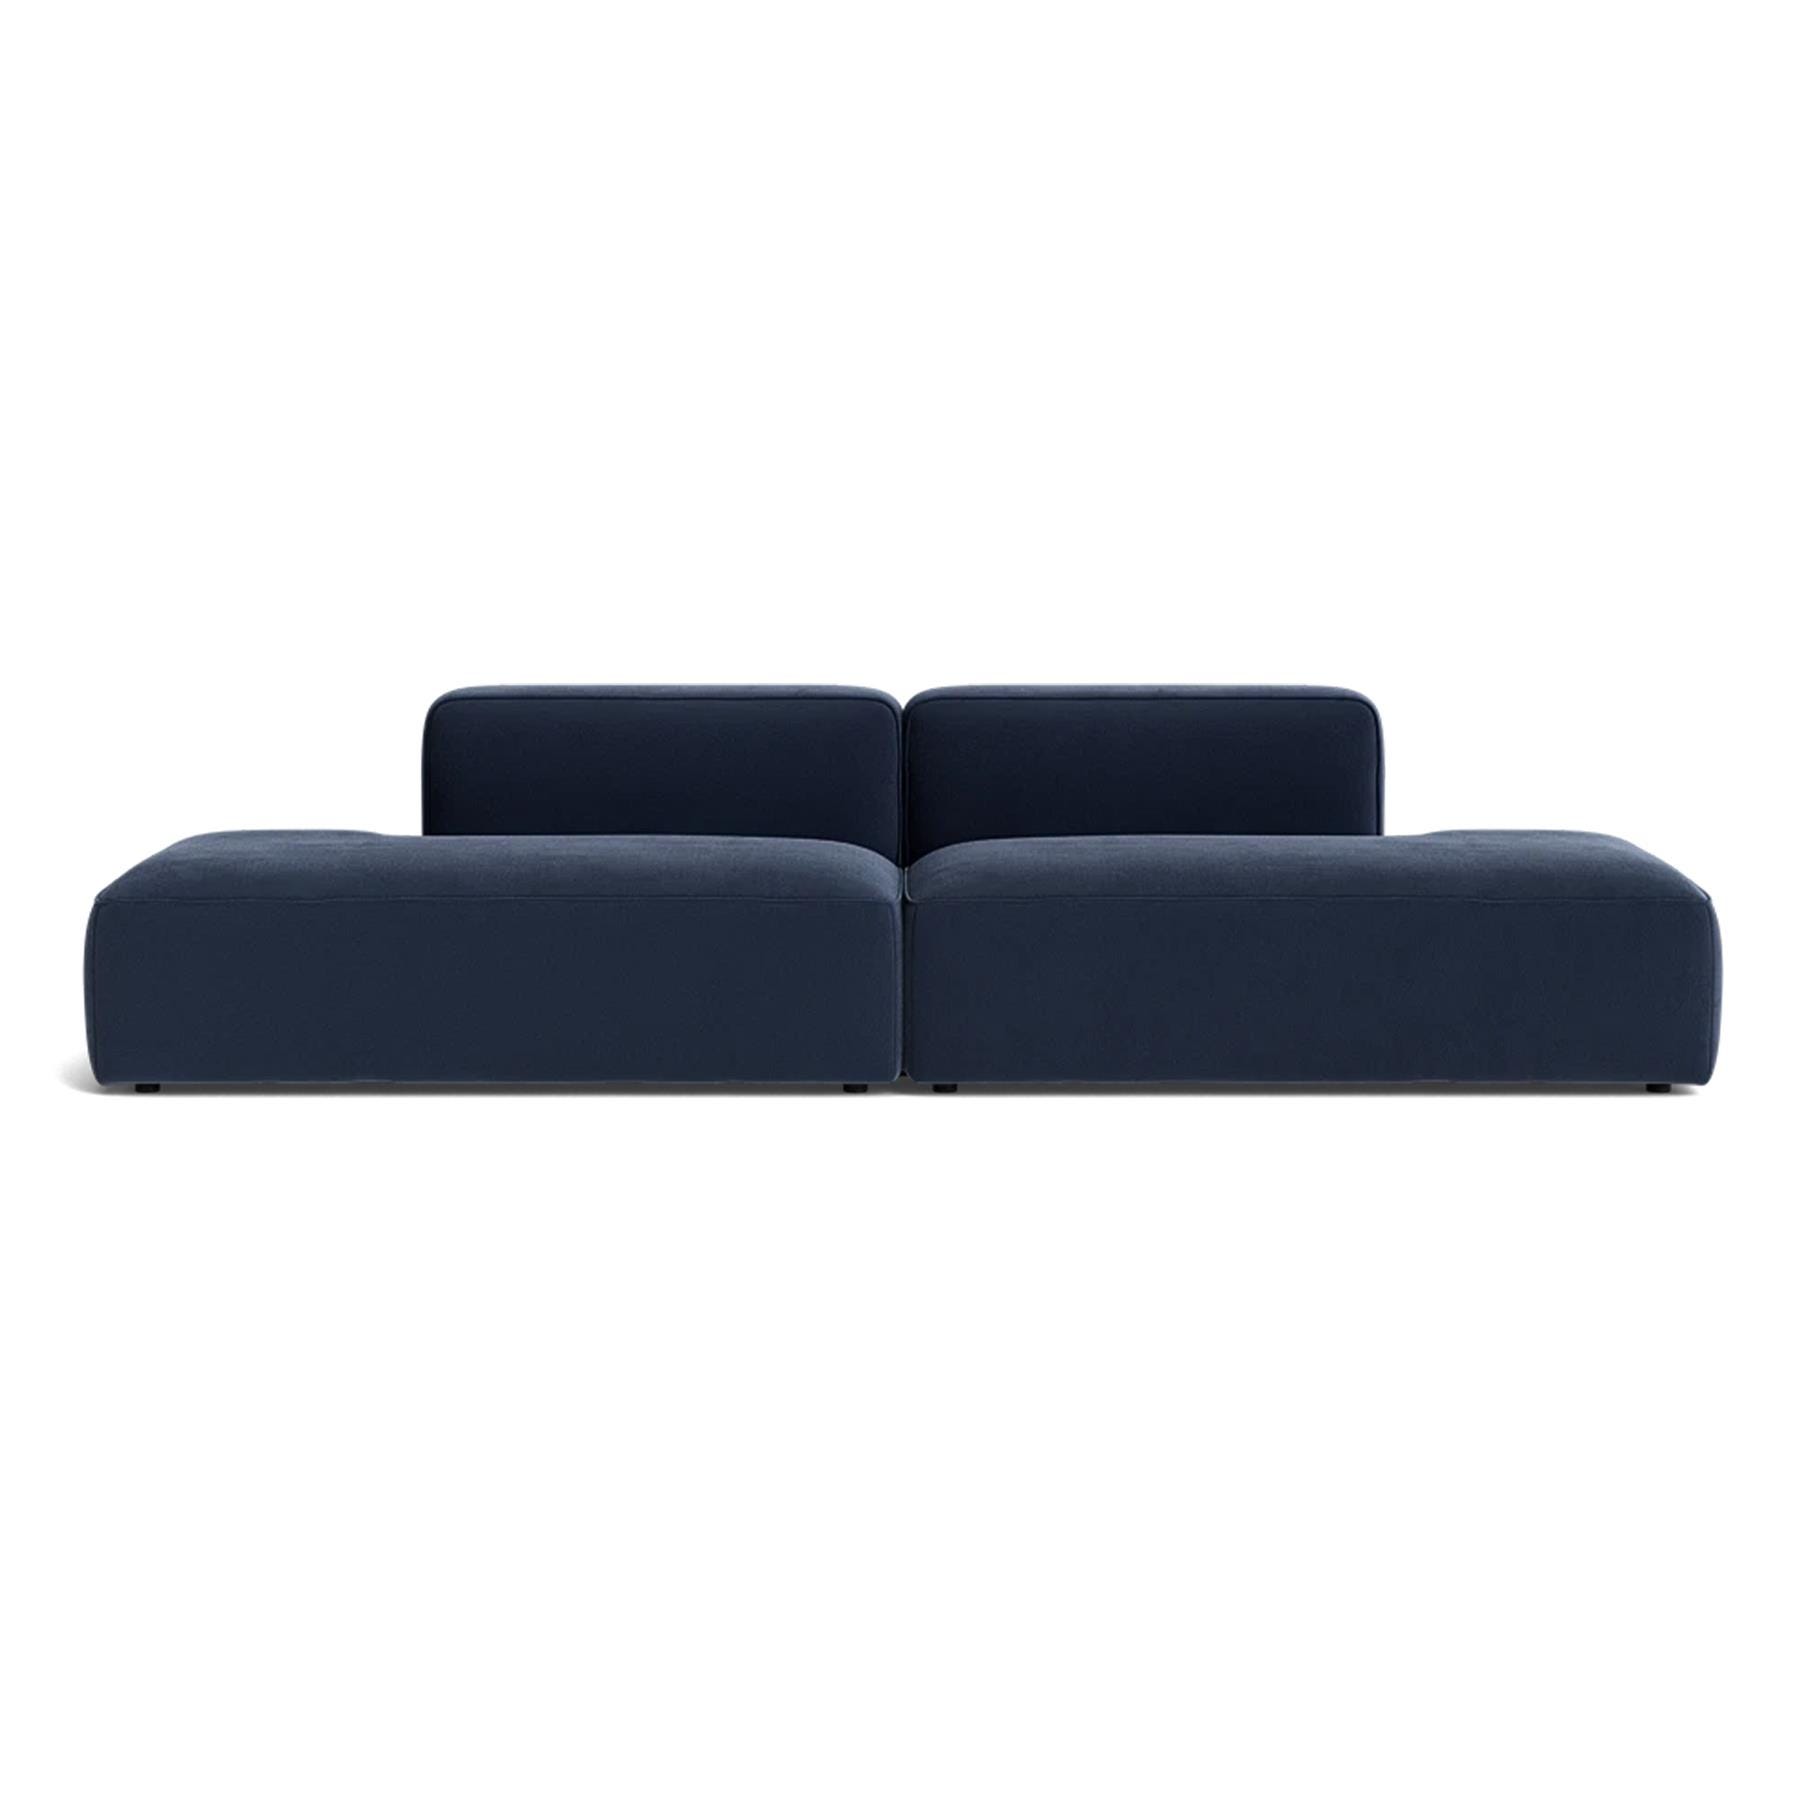 Make Nordic Basecamp Xl Sofa With 2 Open Ends Nordic Velvet 220 Blue Designer Furniture From Holloways Of Ludlow